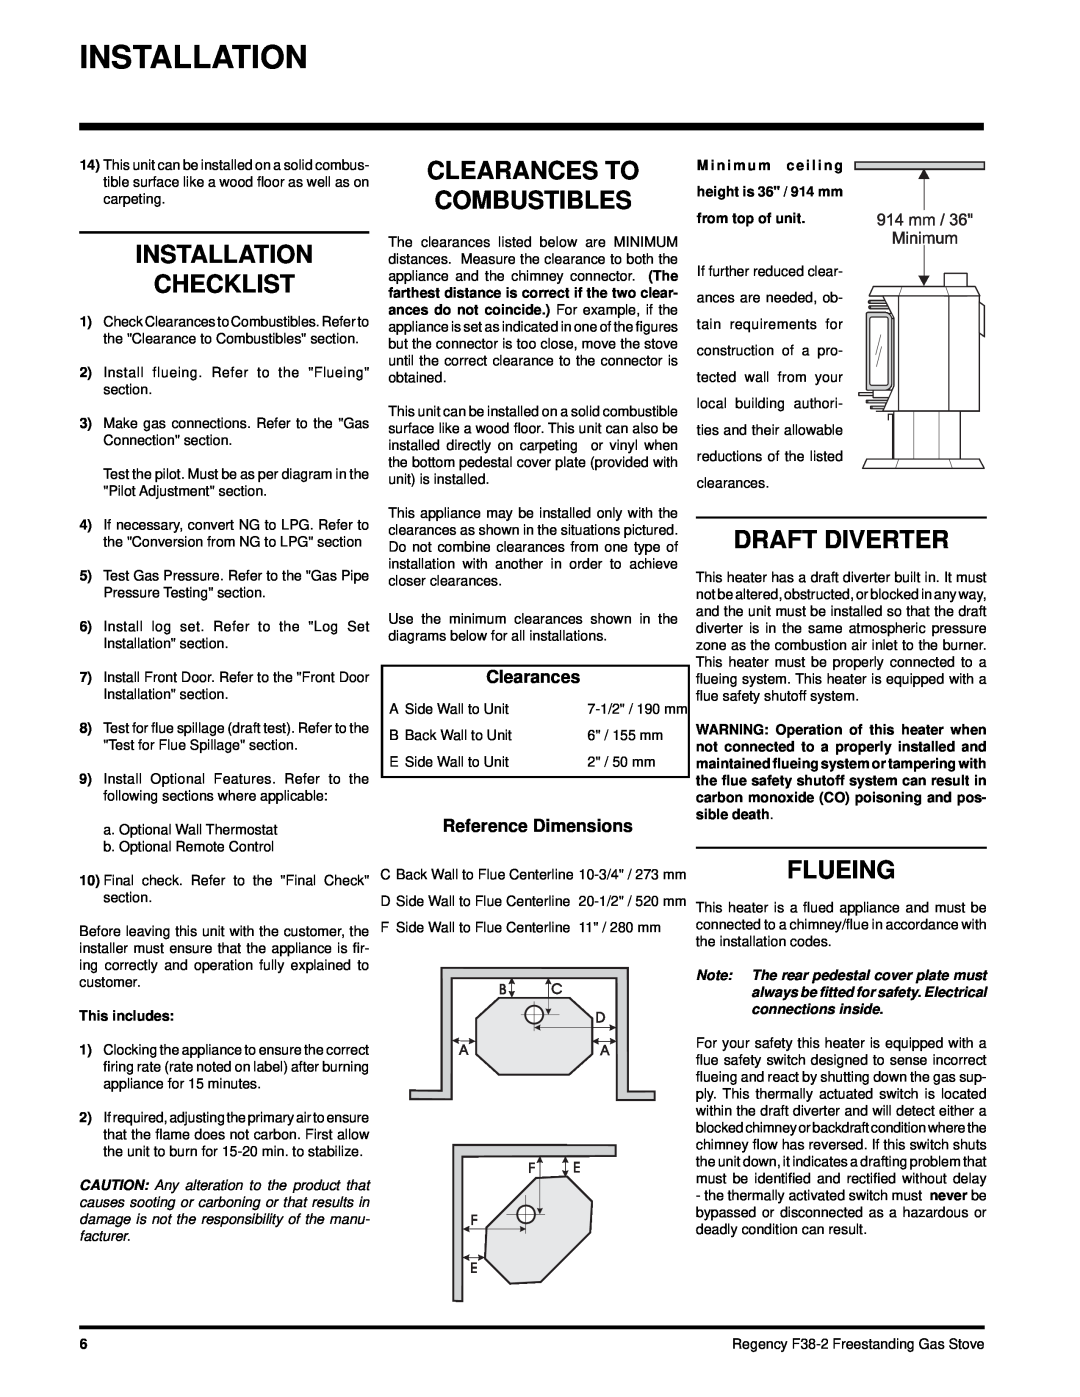 Regency F38-NG2, F38-LPG2 installation manual Installation Checklist, Clearances To Combustibles, Draft Diverter, Flueing 